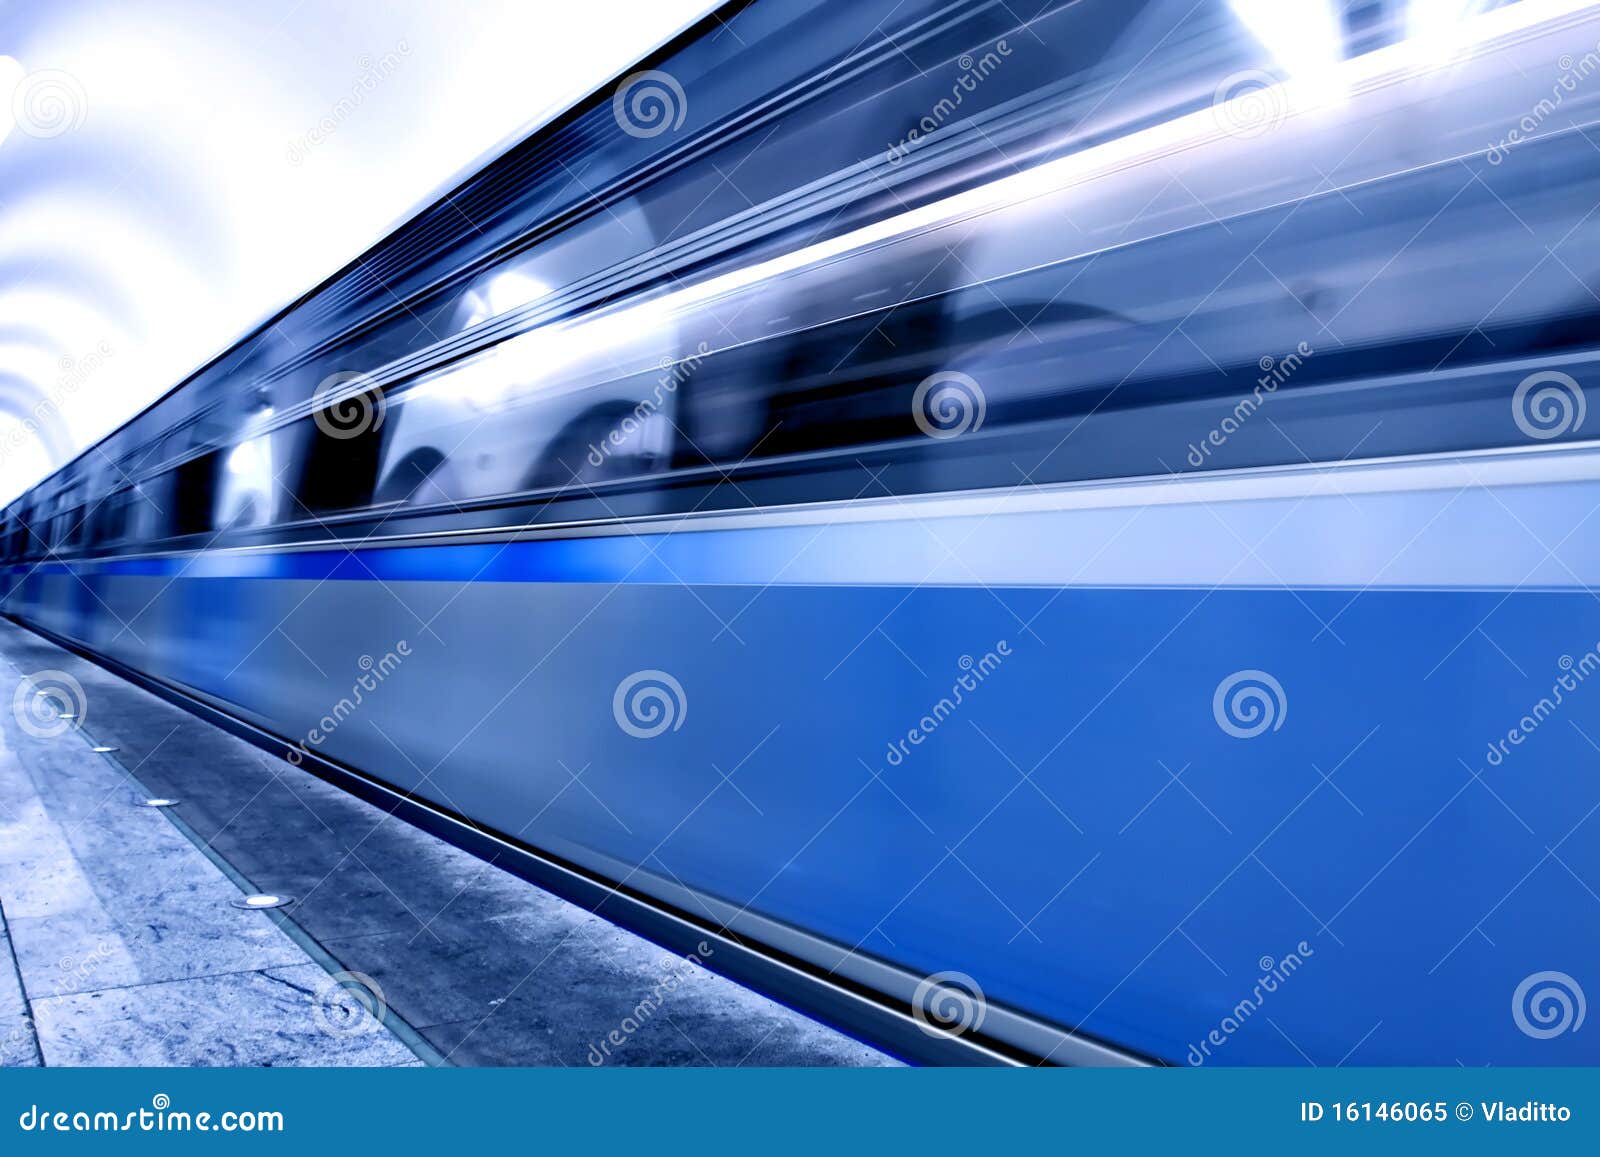 velocity train